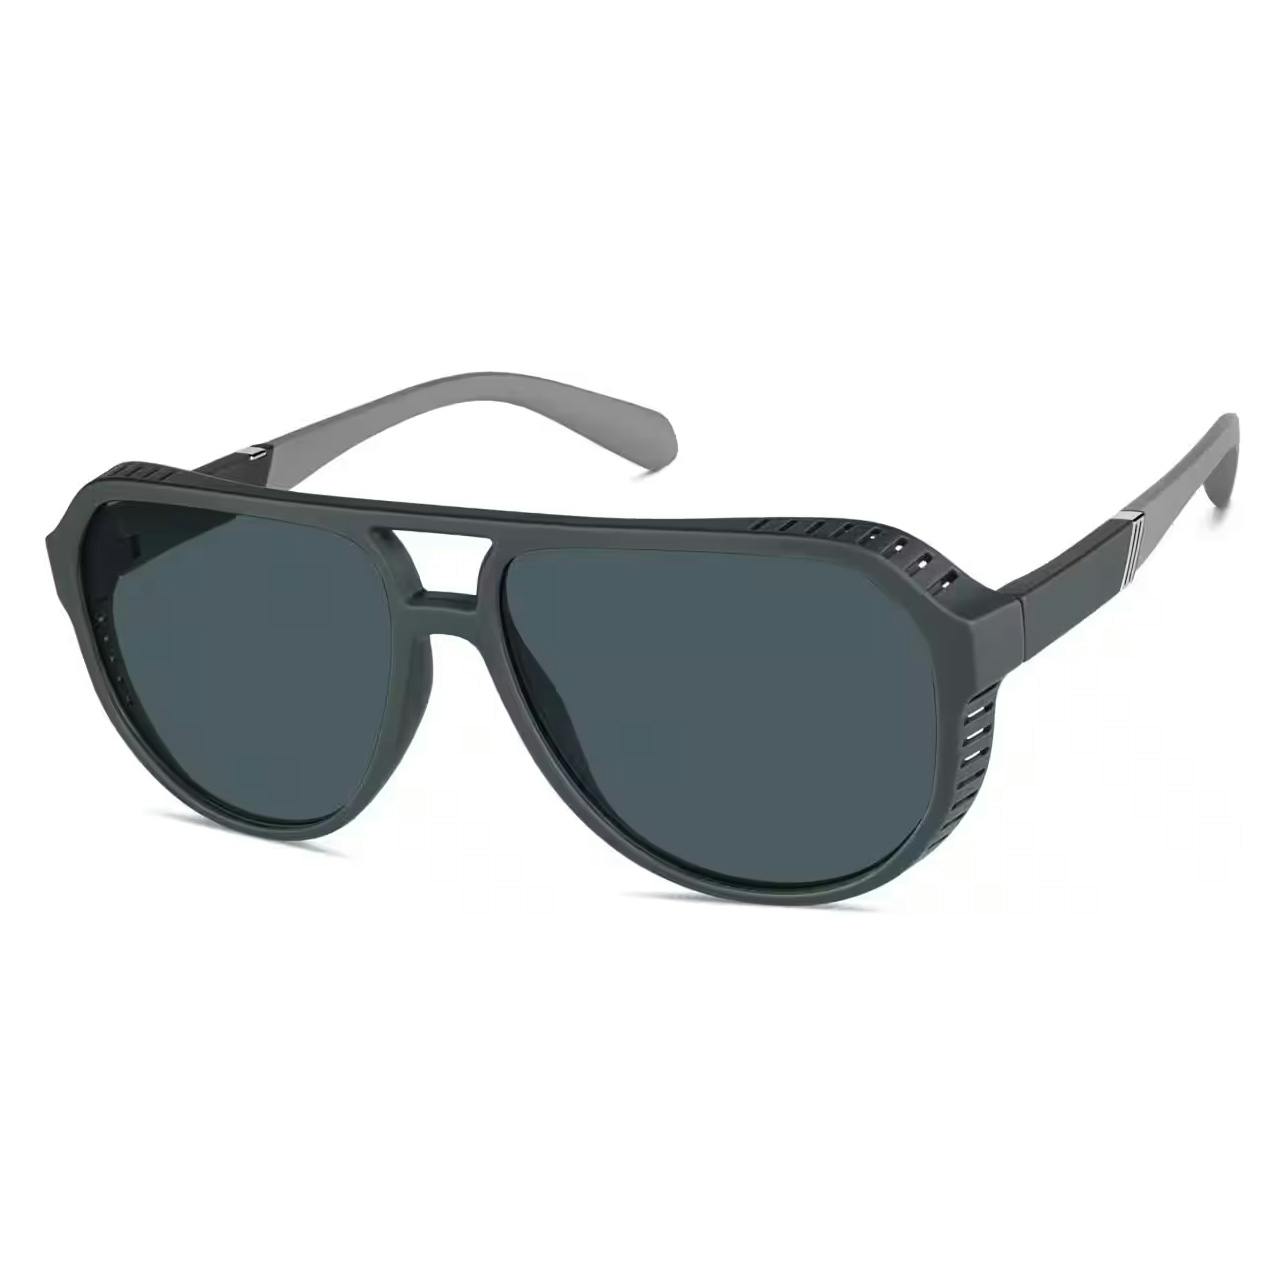 https://activejunky-cdn.s3.amazonaws.com/aj-content/1143921-sunglasses-2.jpg